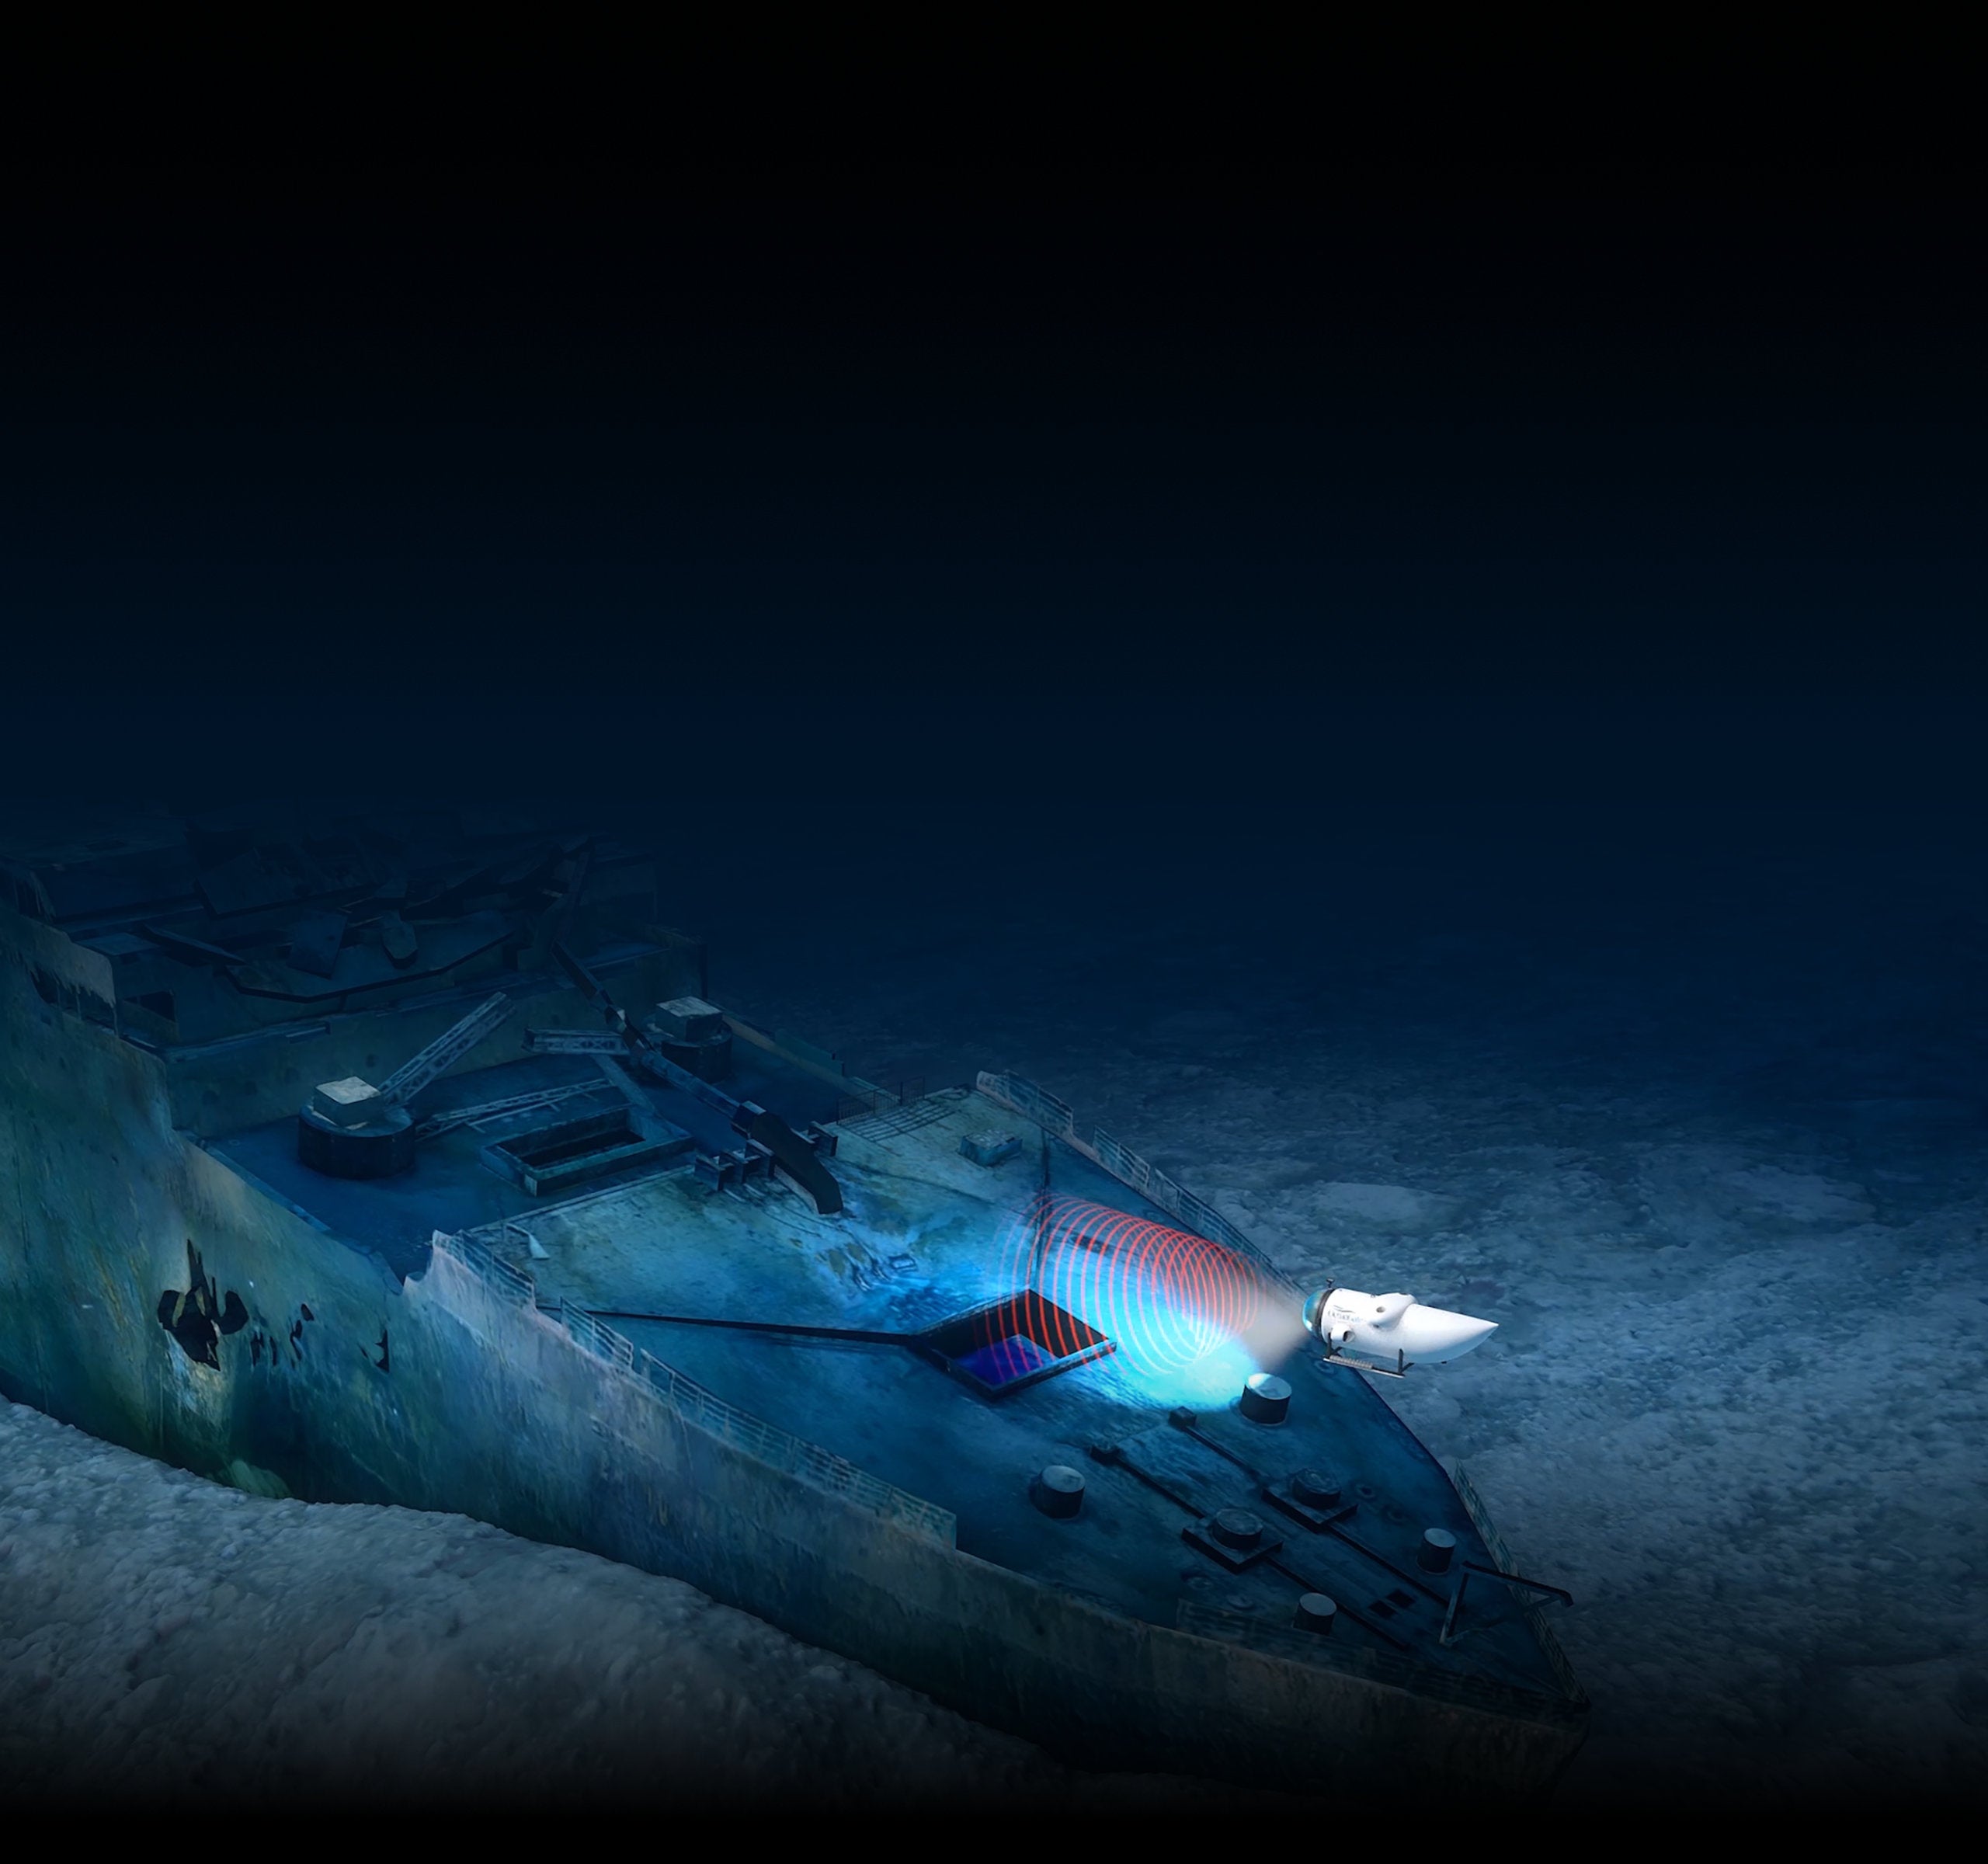 Rendering of the submersible Titan exploring the Titanic